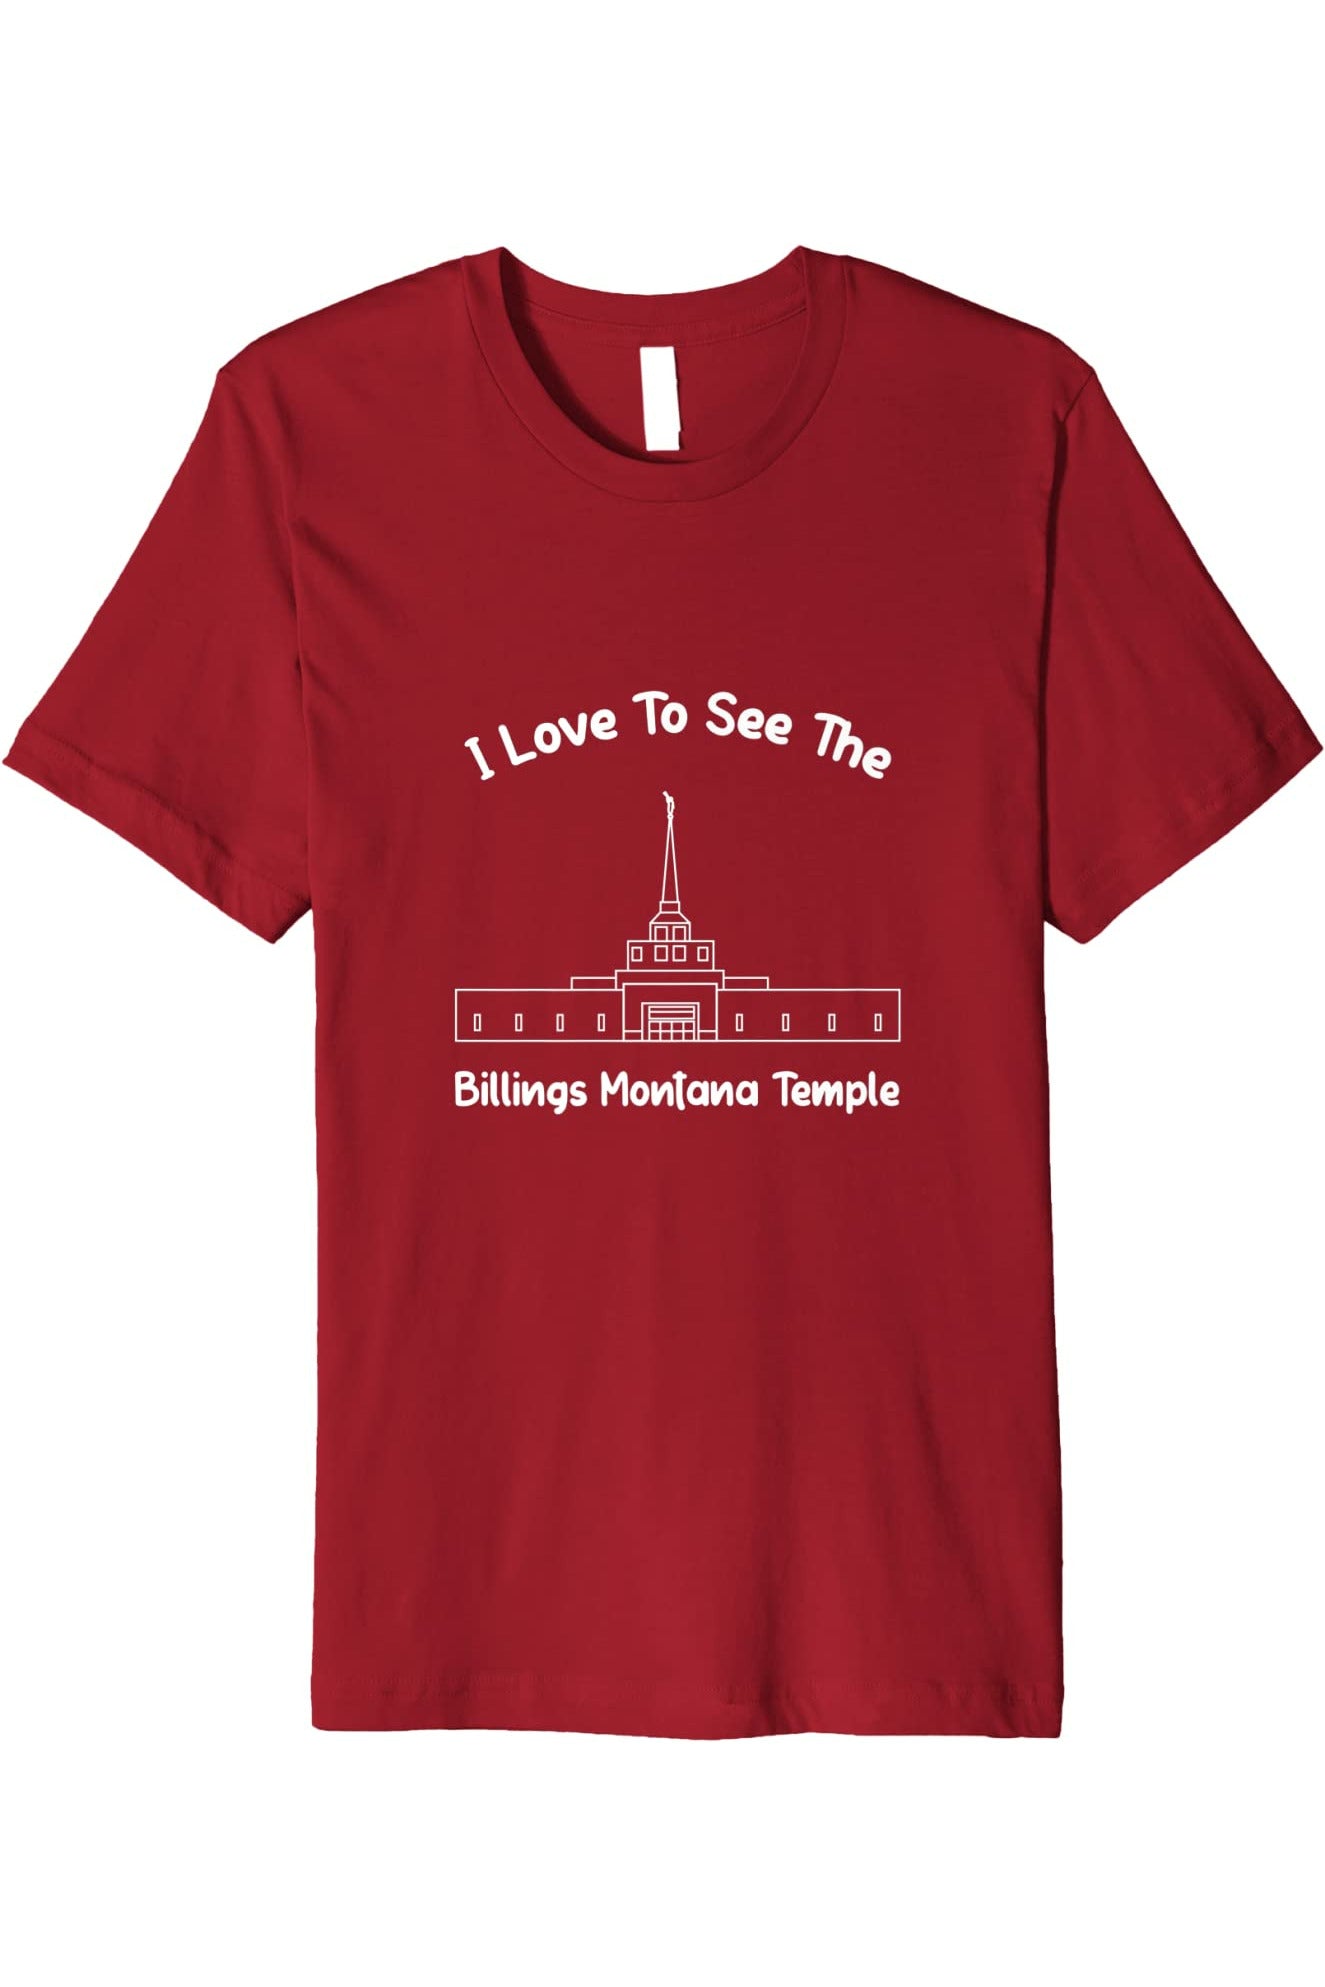 Billings Montana Temple T-Shirt - Premium - Primary Style (English) US